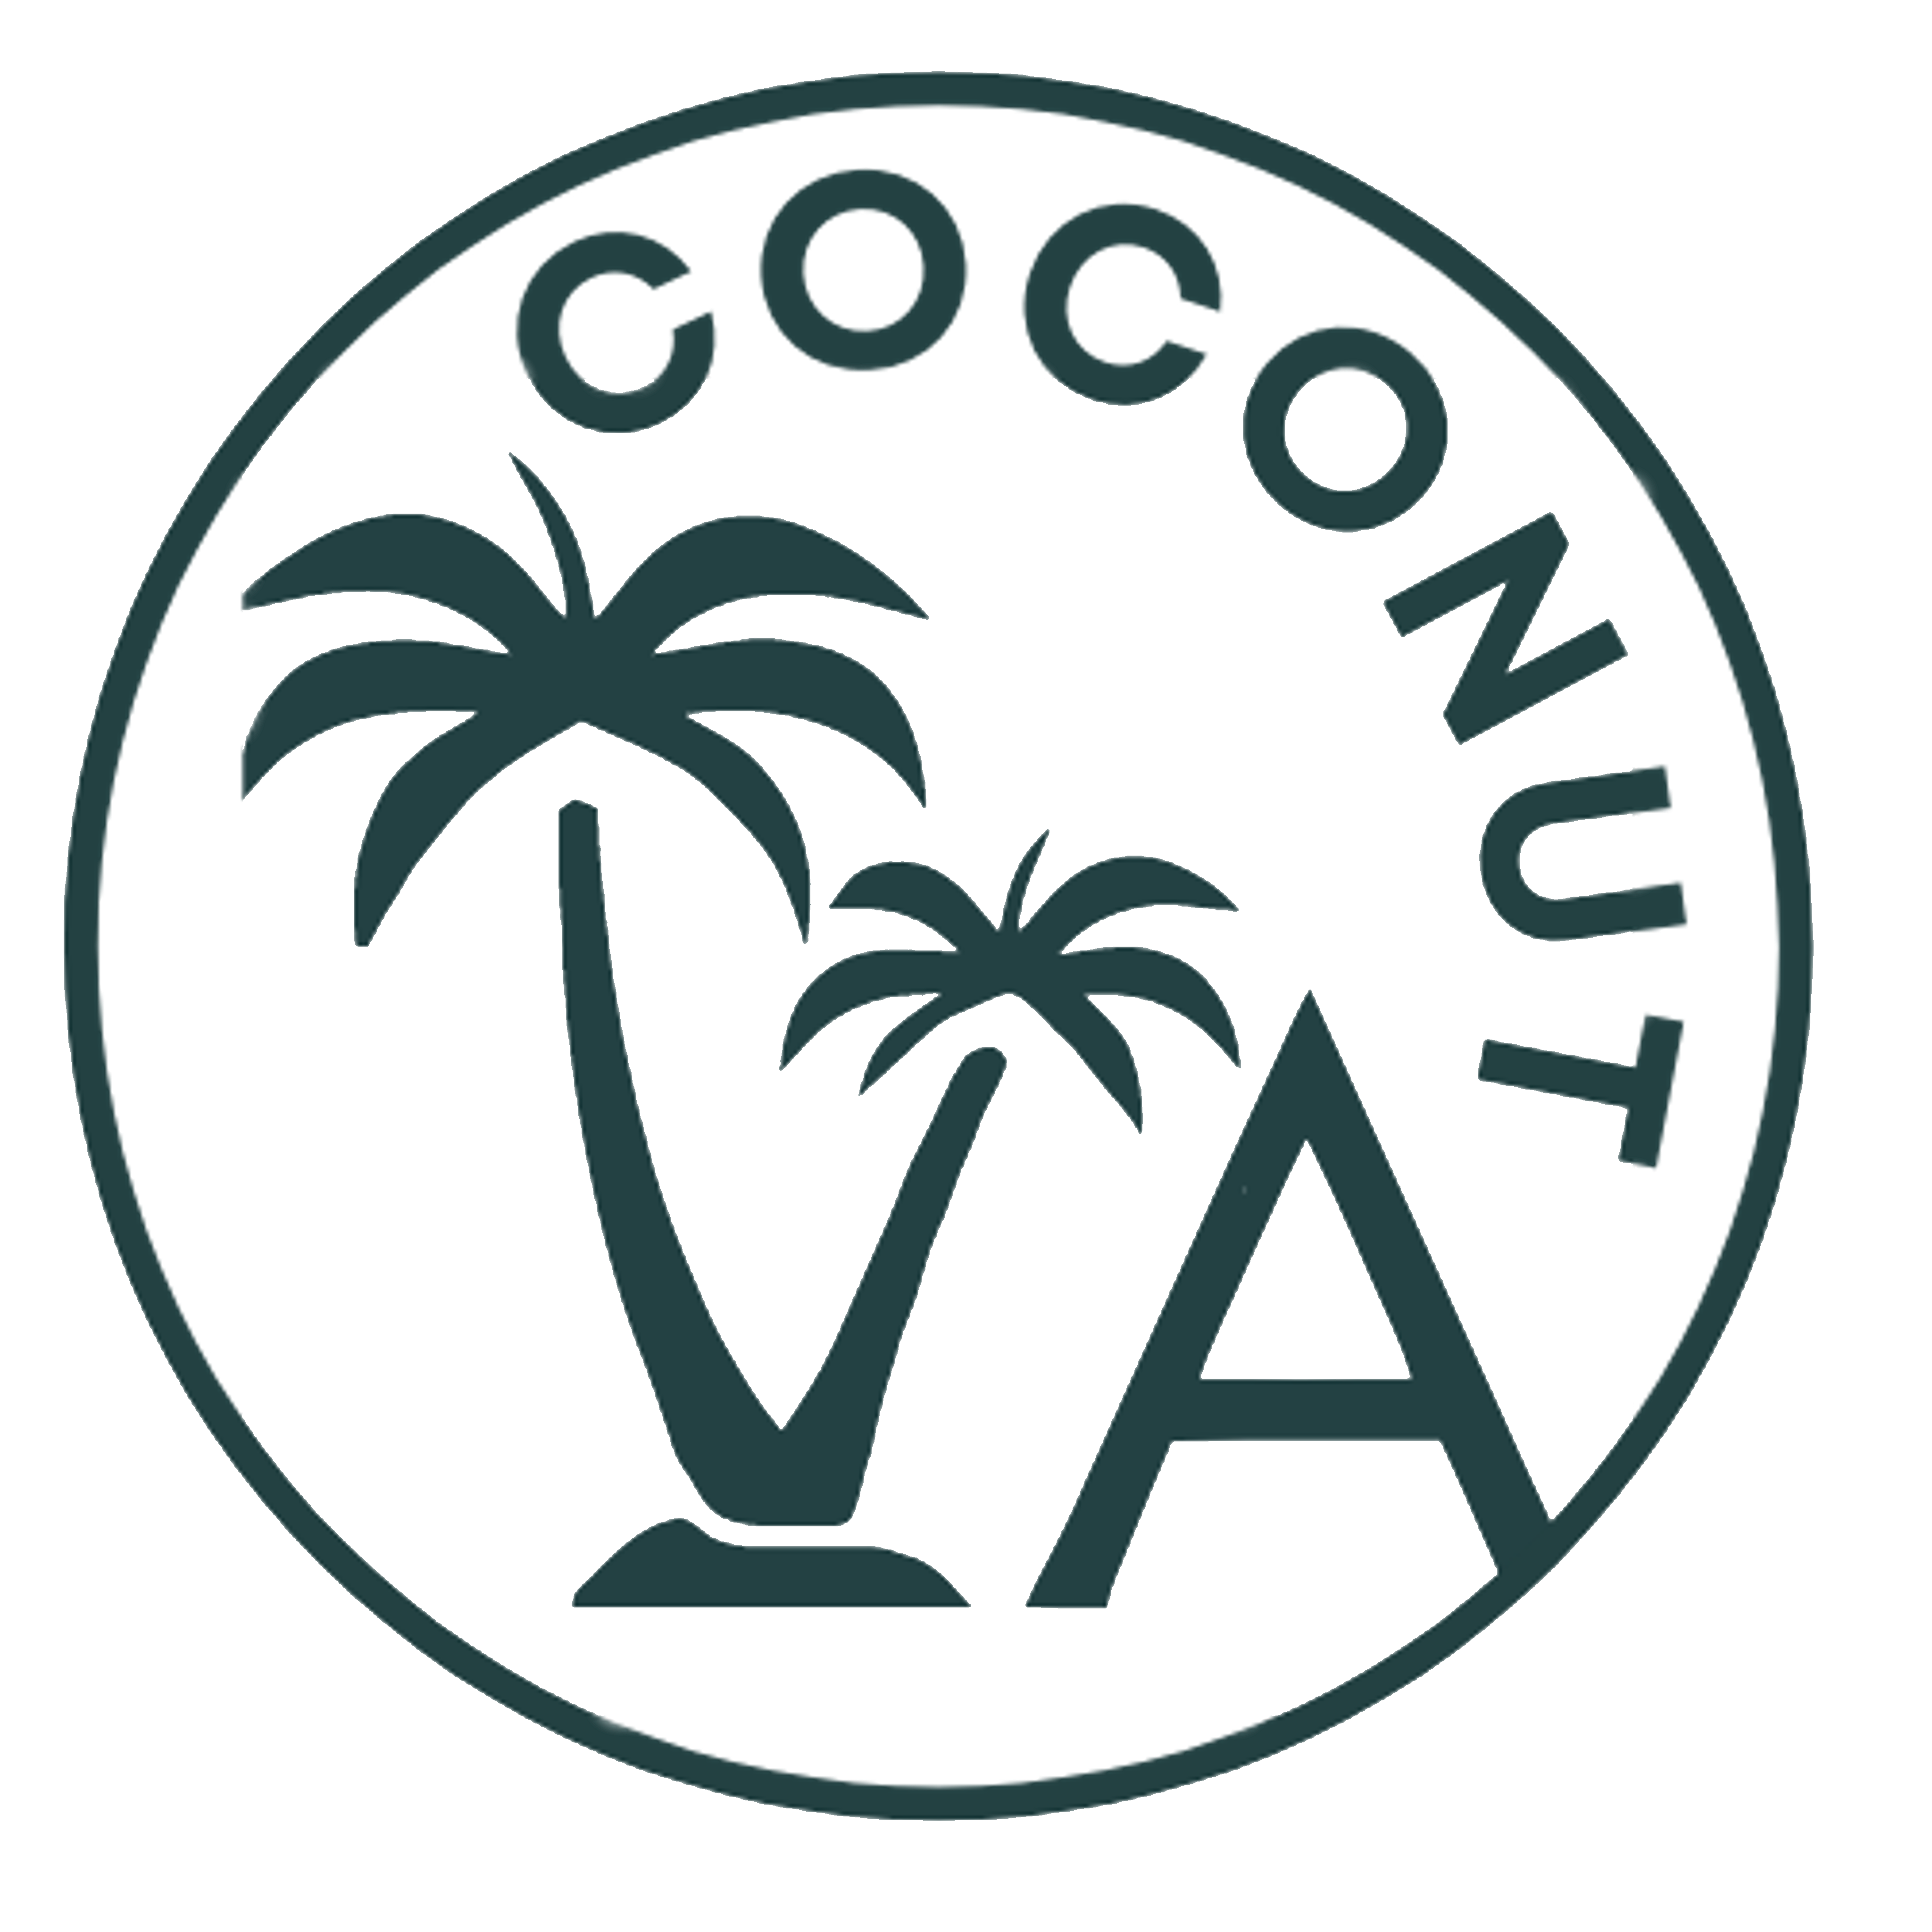 Coconut VA logo